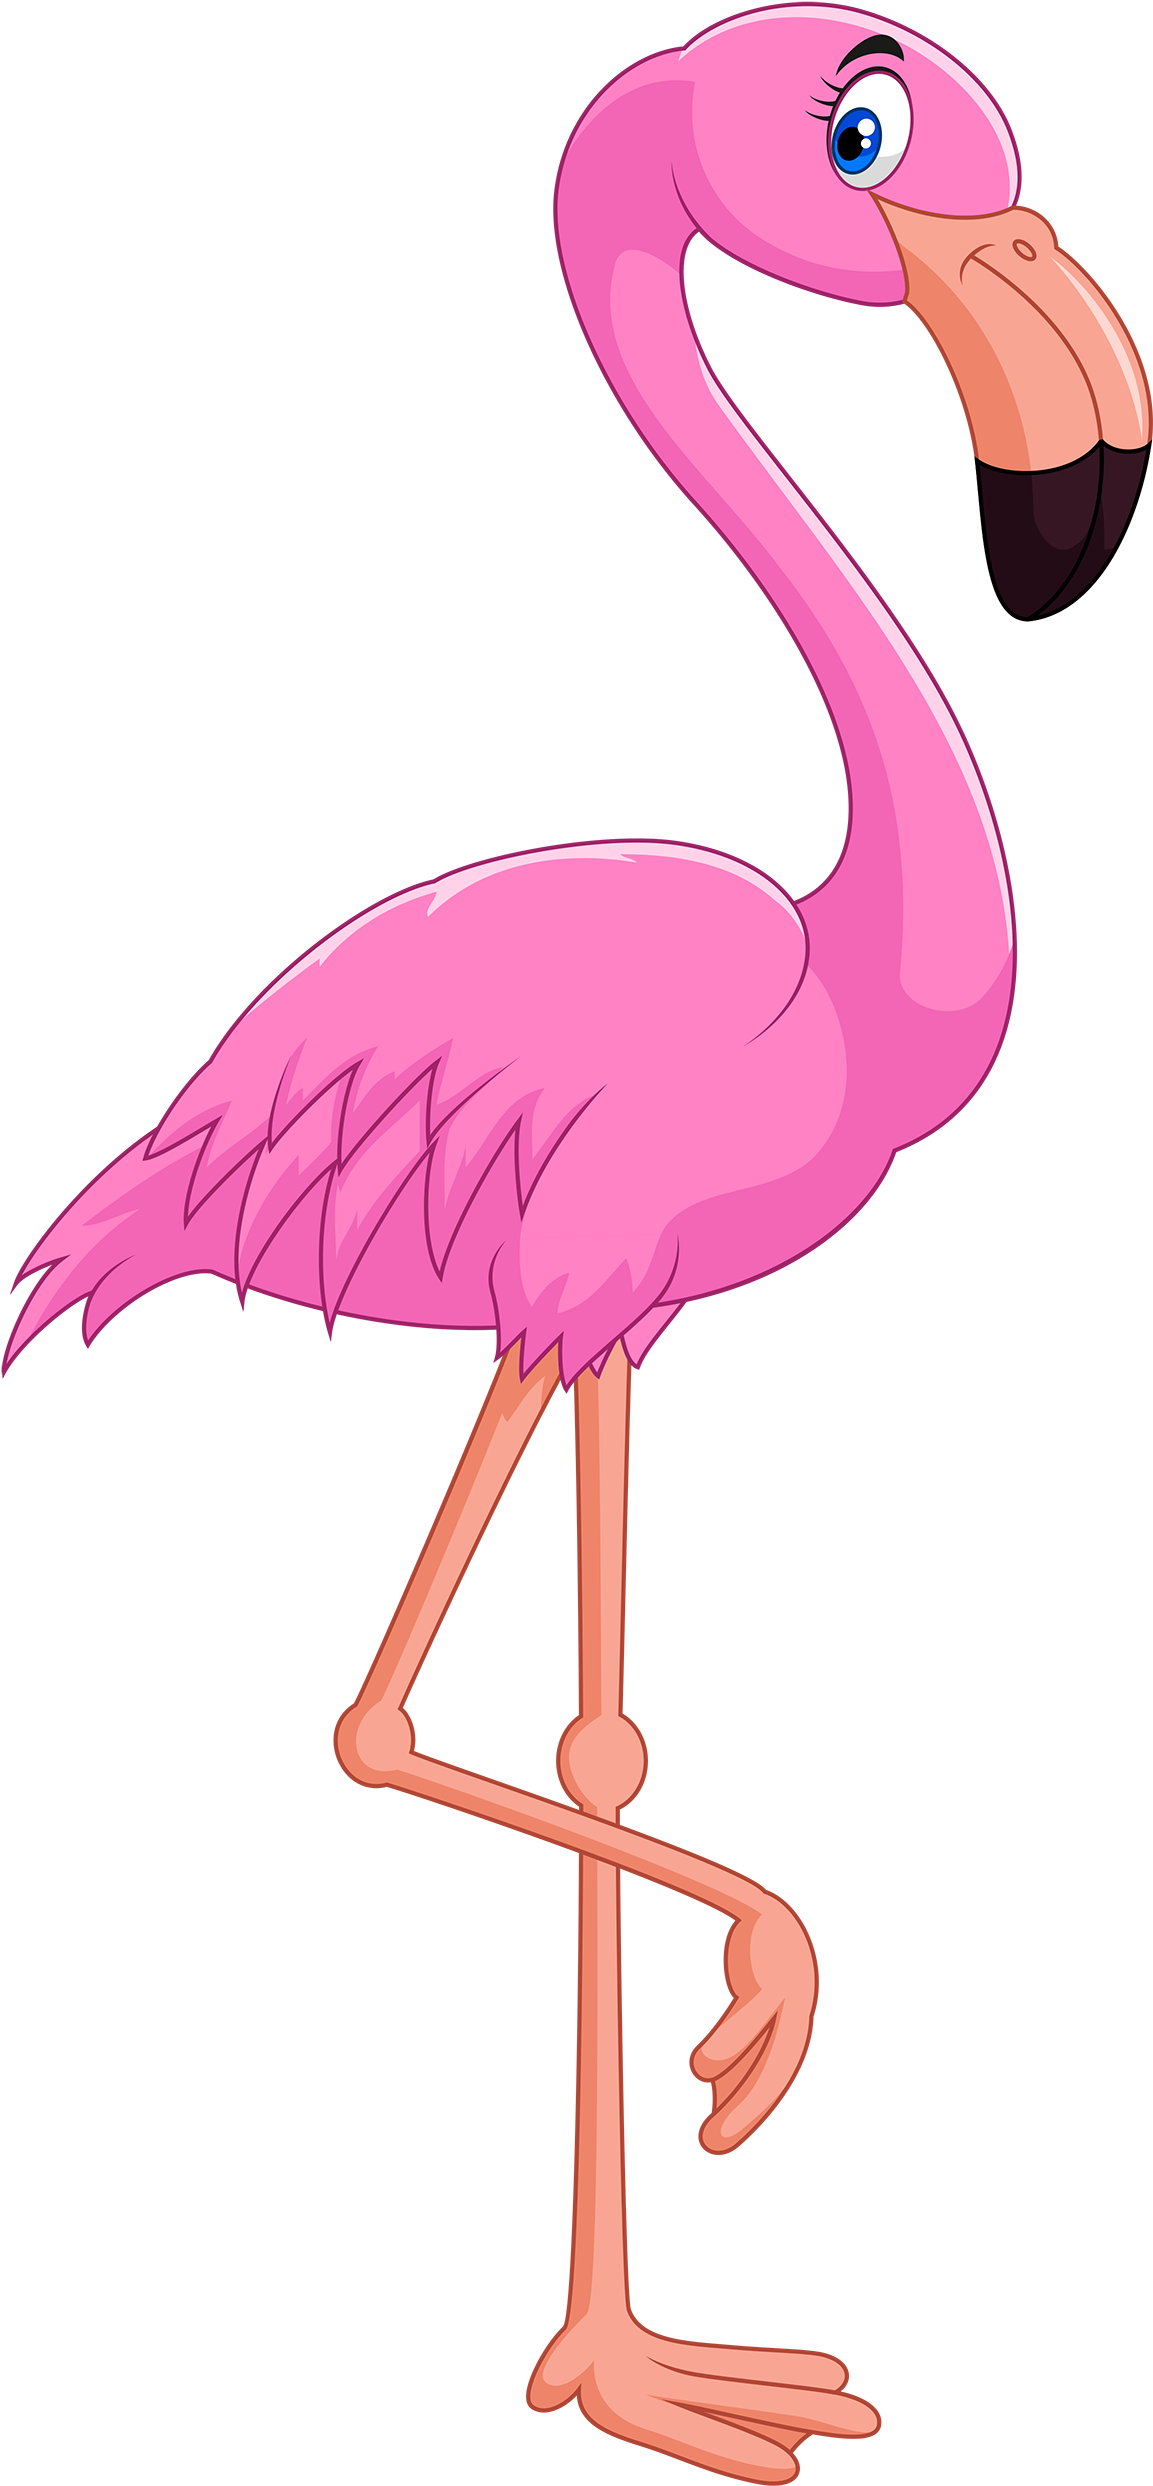 flamingo cartoon characters